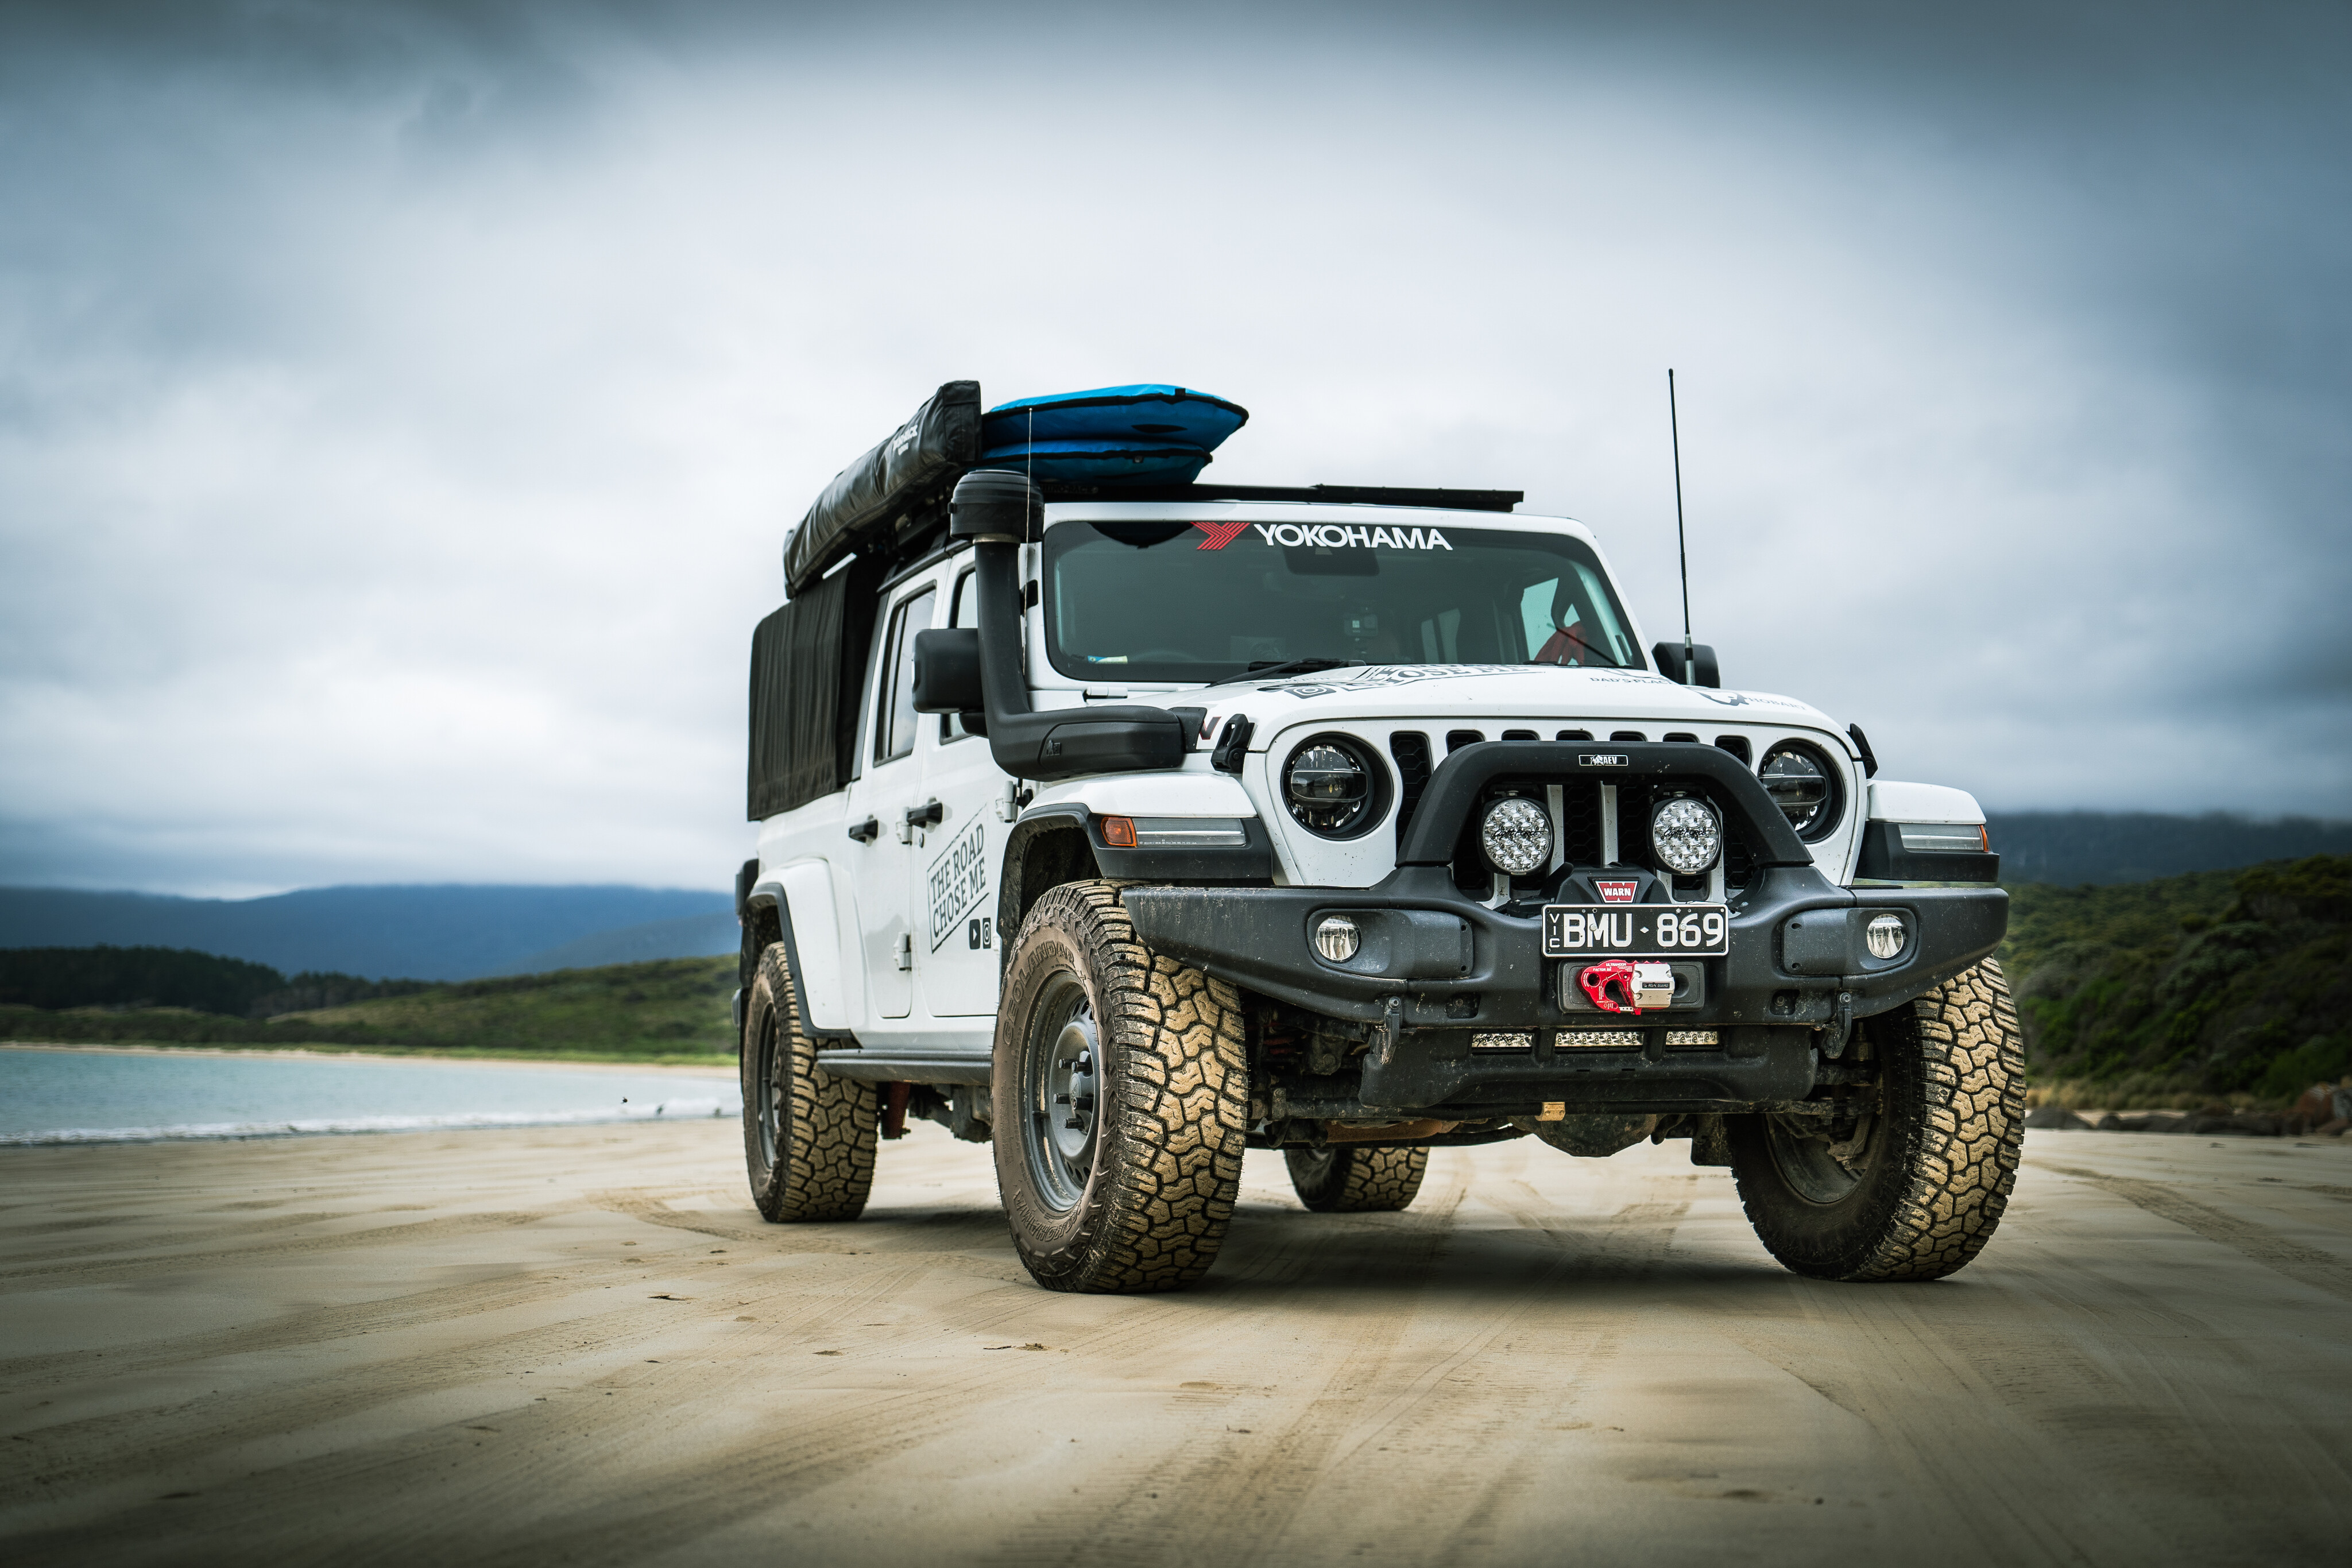 929e1bea/sandy cape jeep beach 4x4 australia explore tasmania jpg